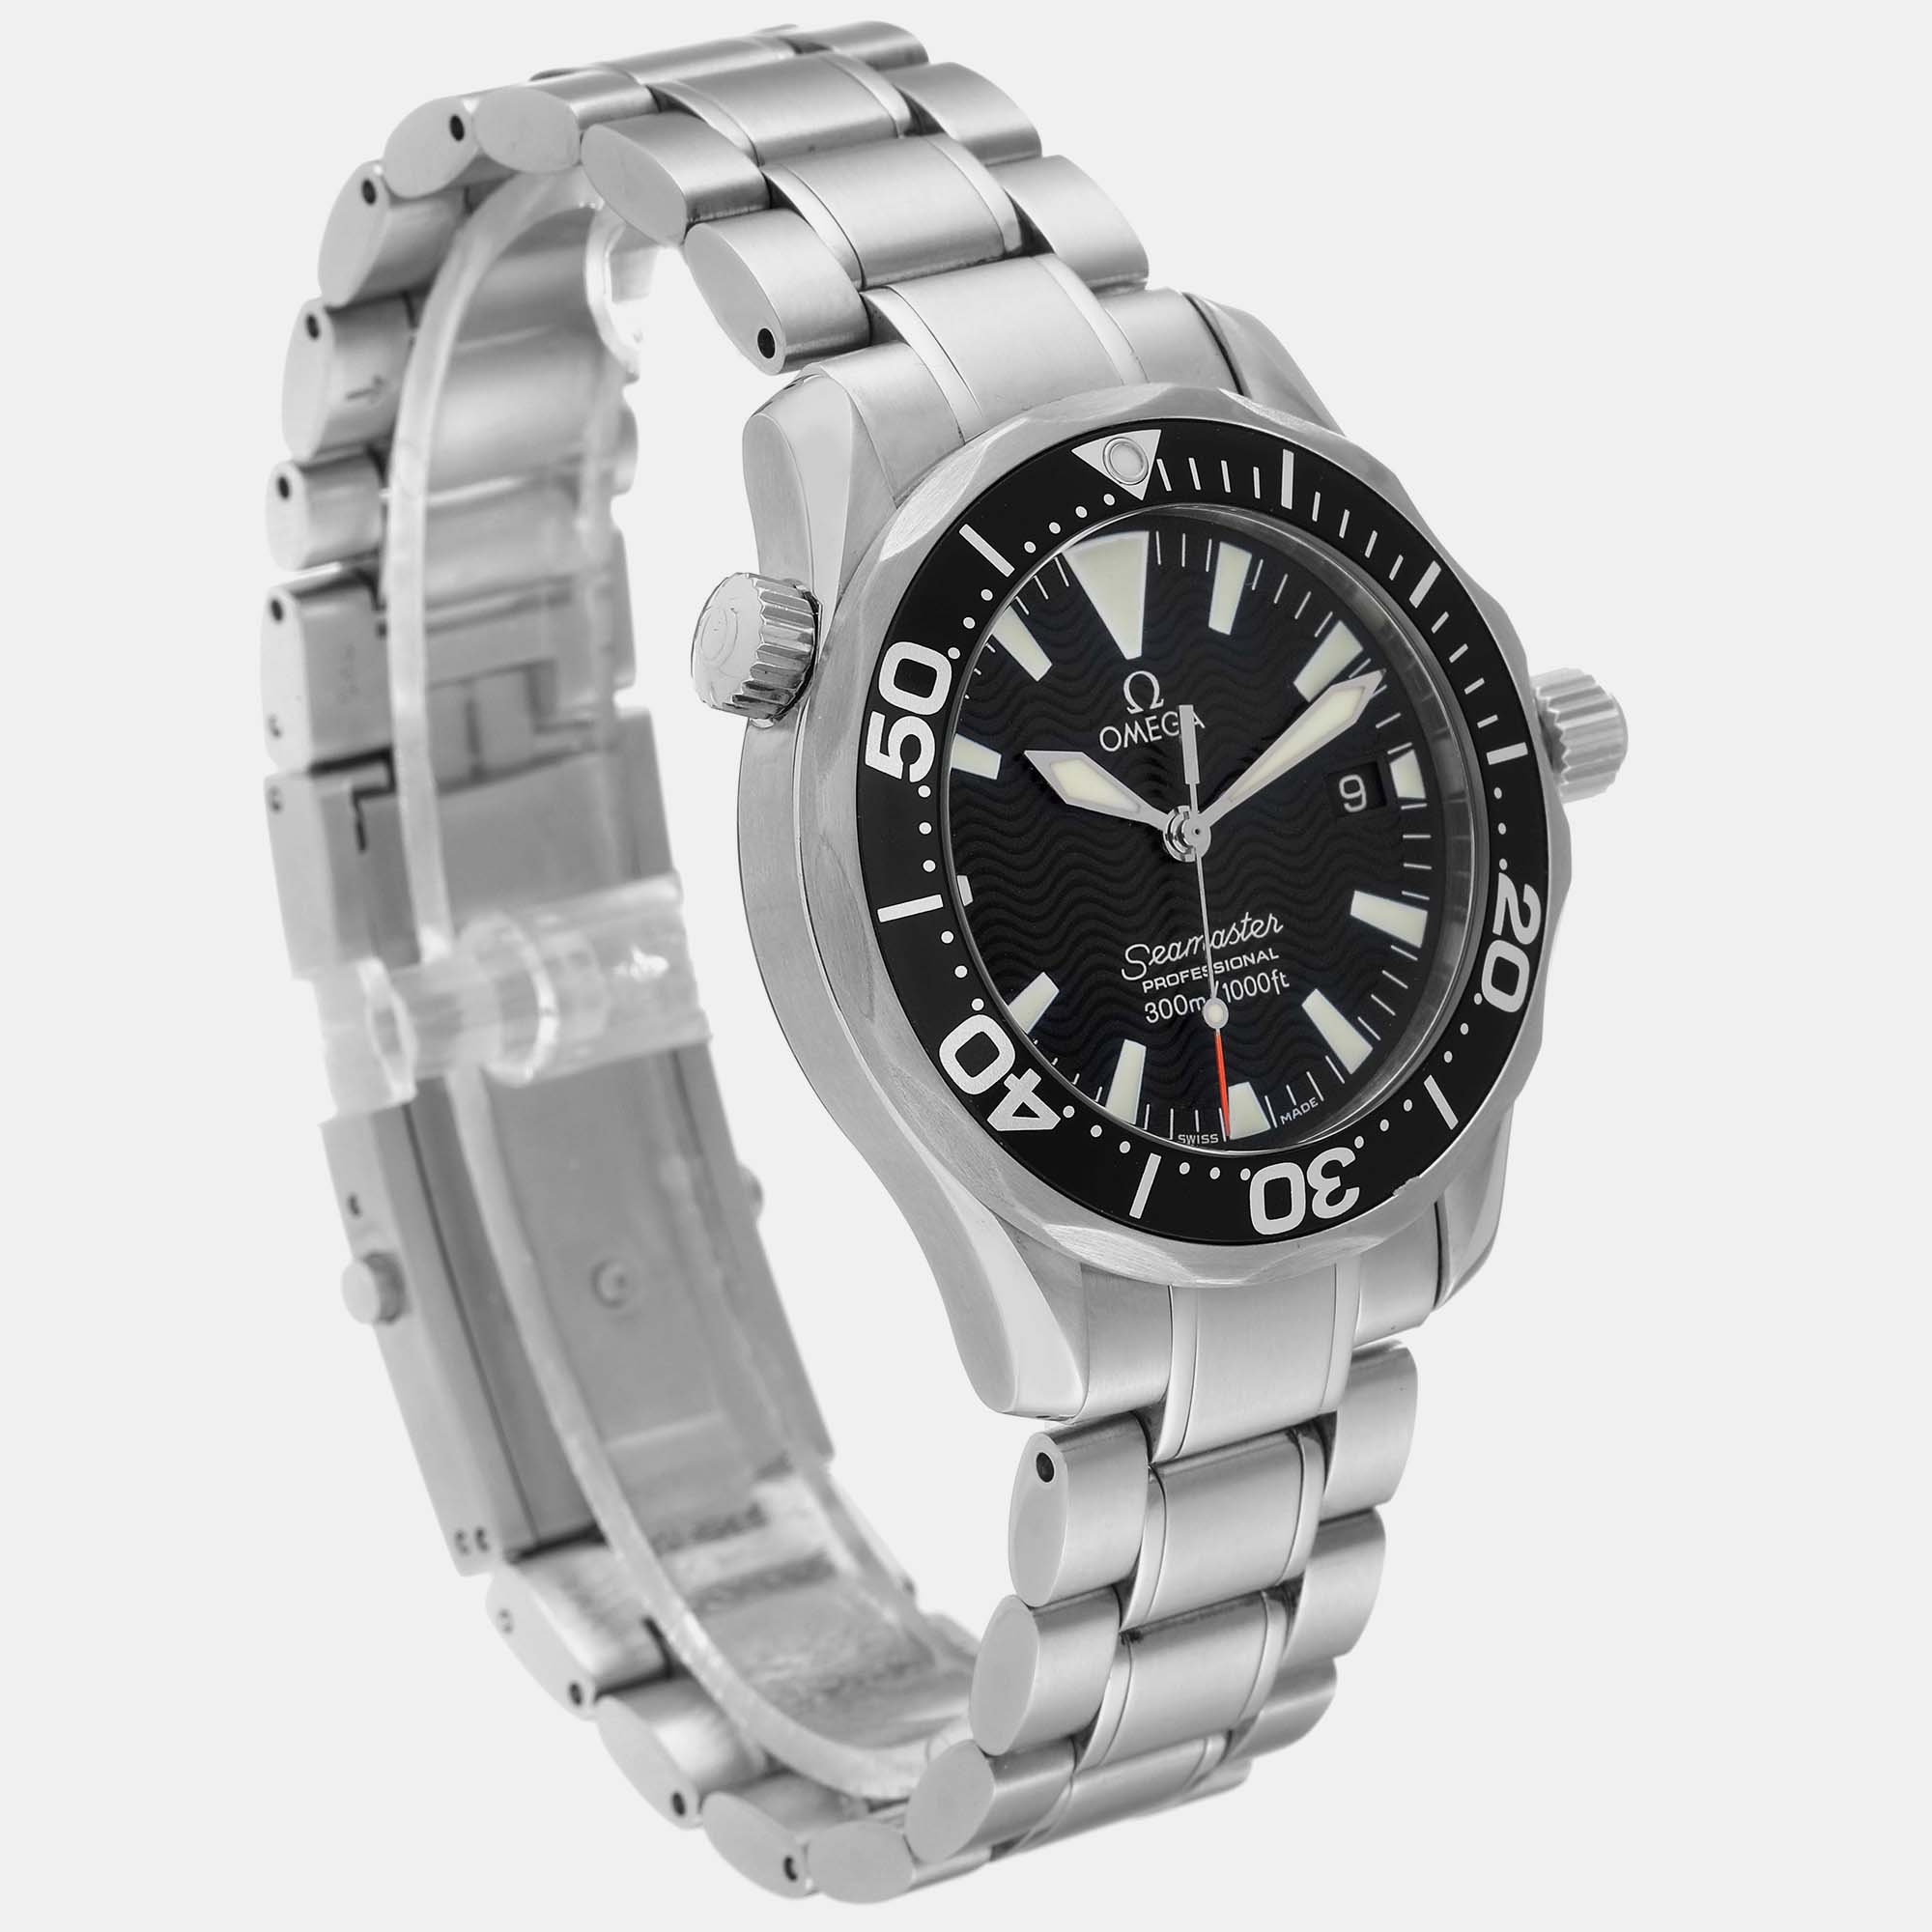 Omega Black Stainless Steel Seamaster 2262.50.00 Quartz Men's Wristwatch 36 Mm